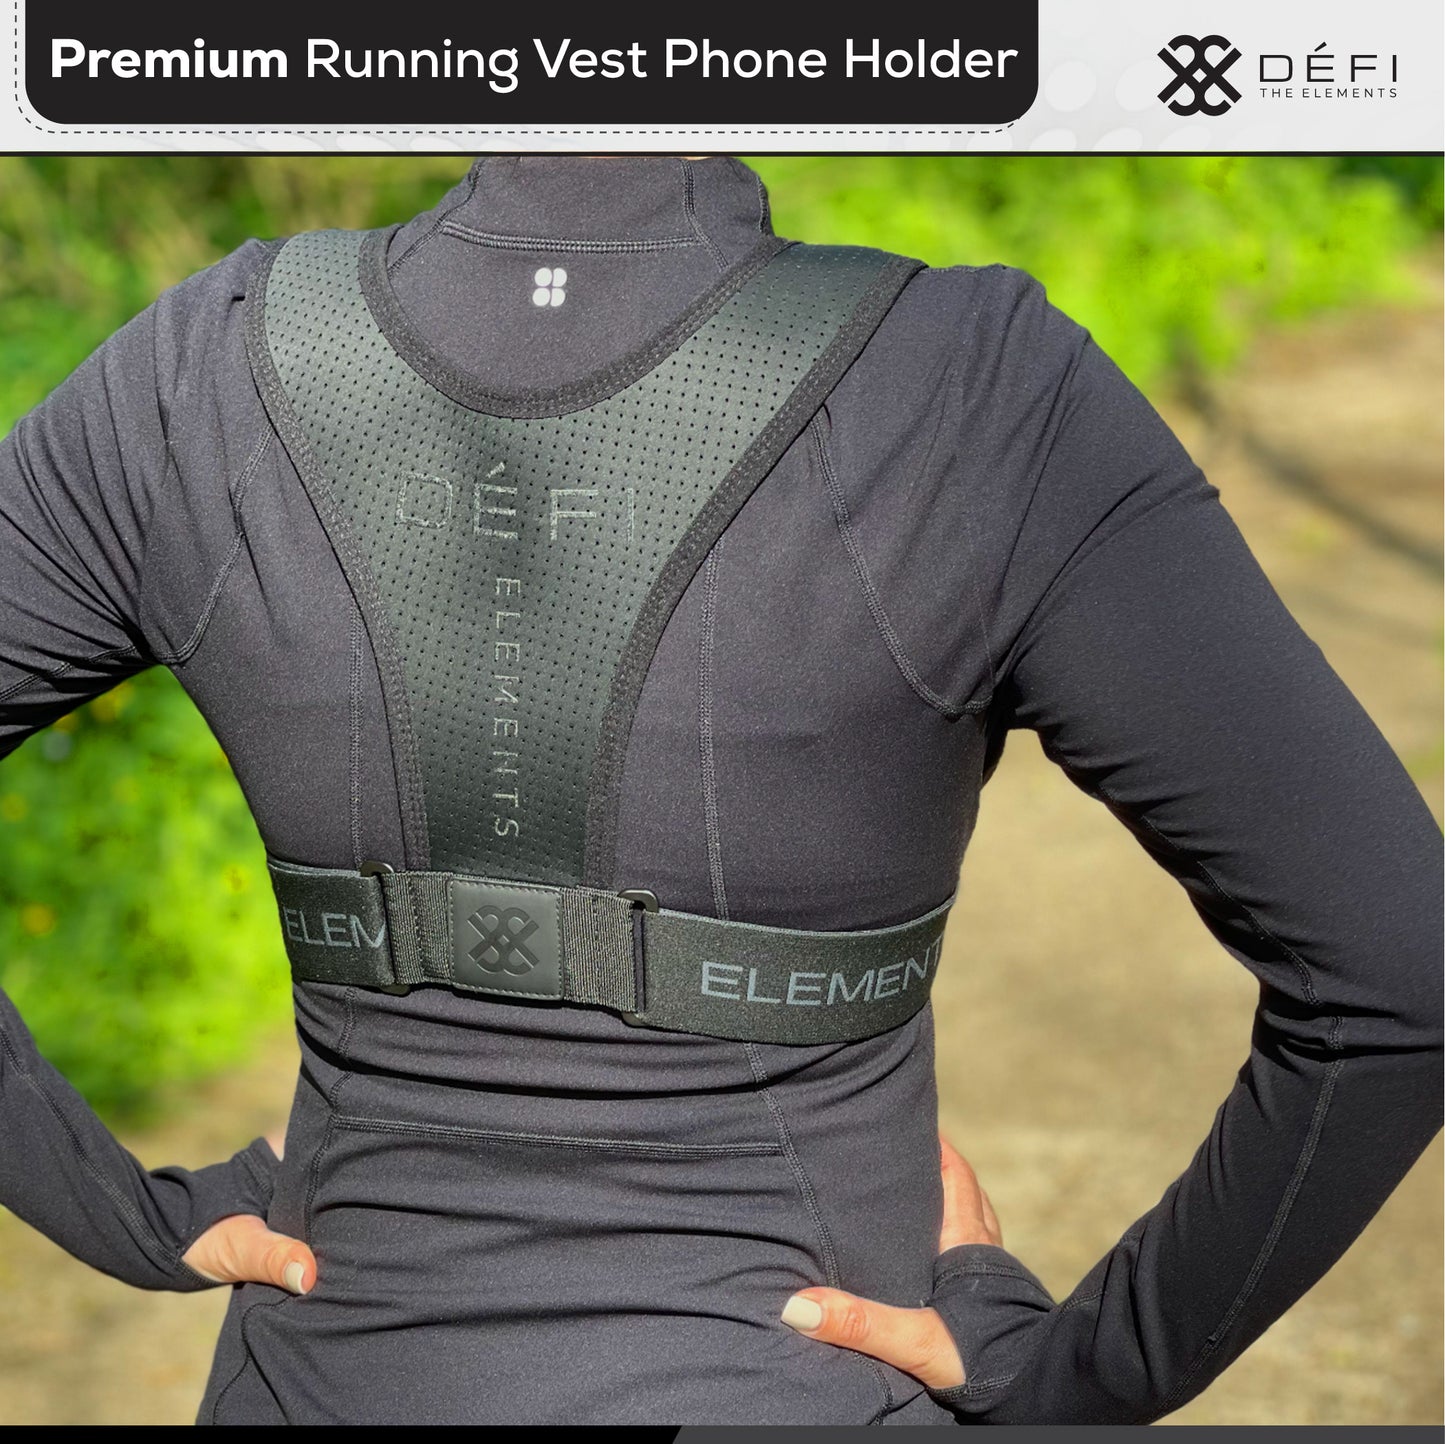 DÉFI THE ELEMENTS | Best In Class Premium Running Vest Phone Holder